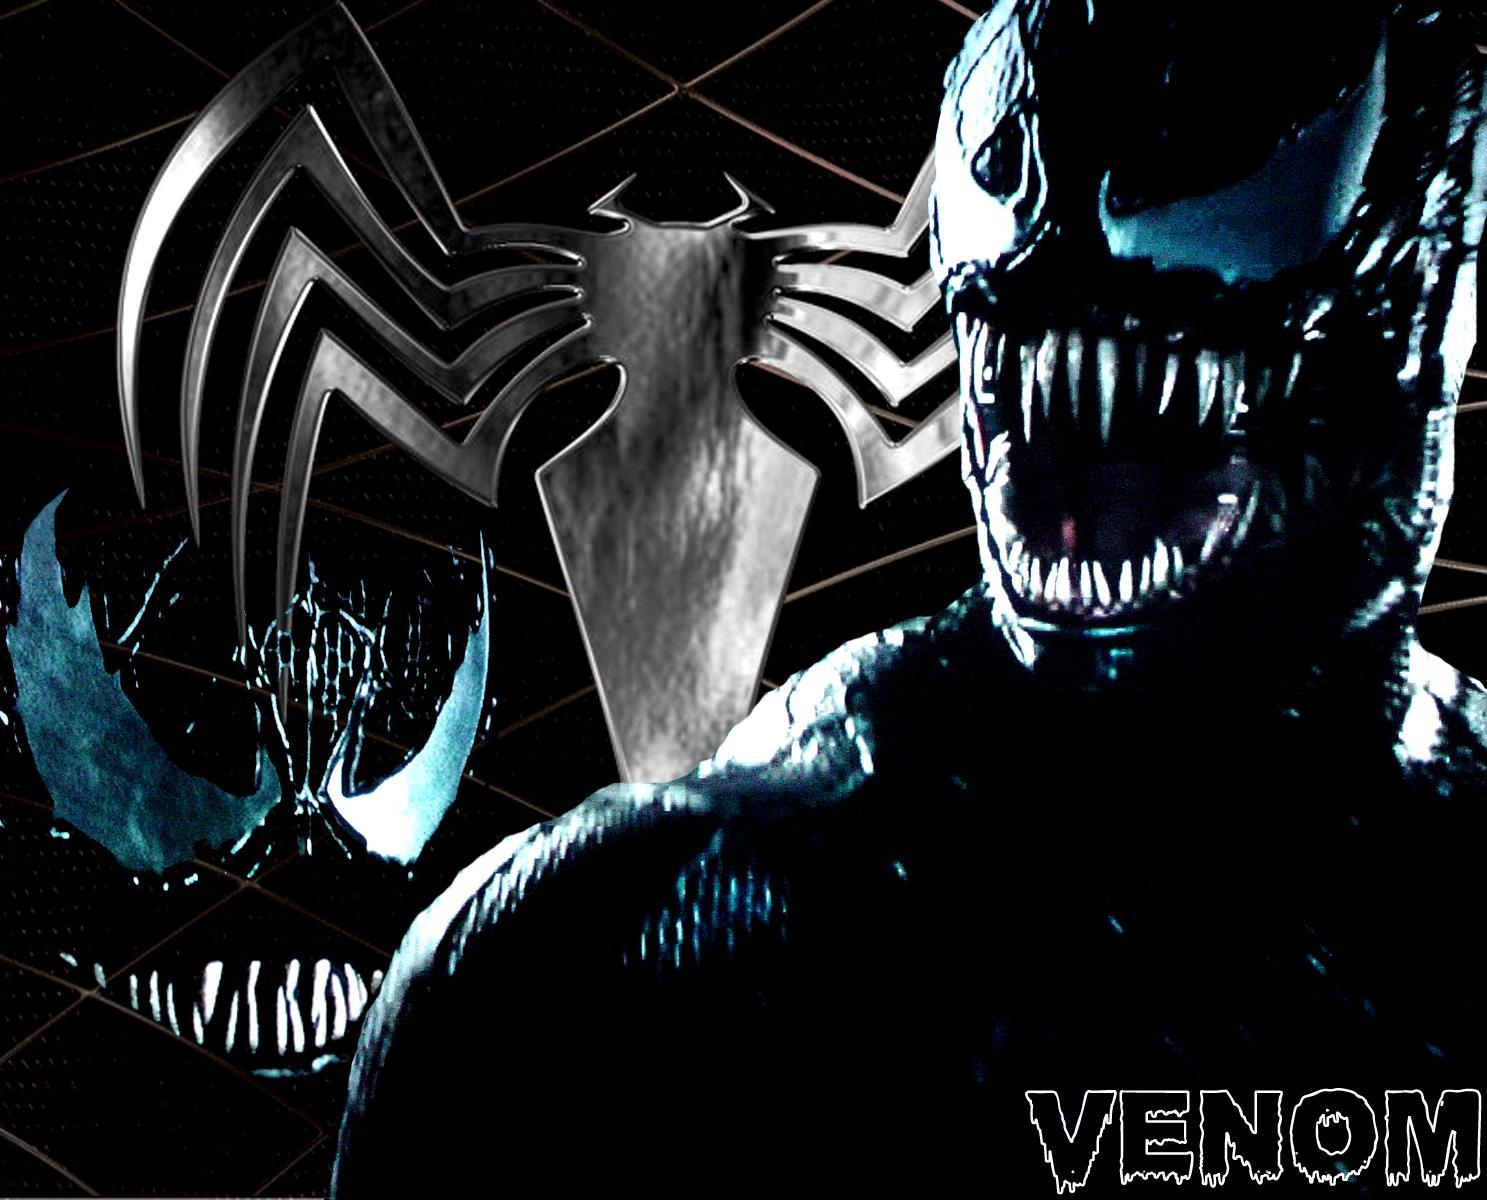 Spiderman Venom Wallpaper